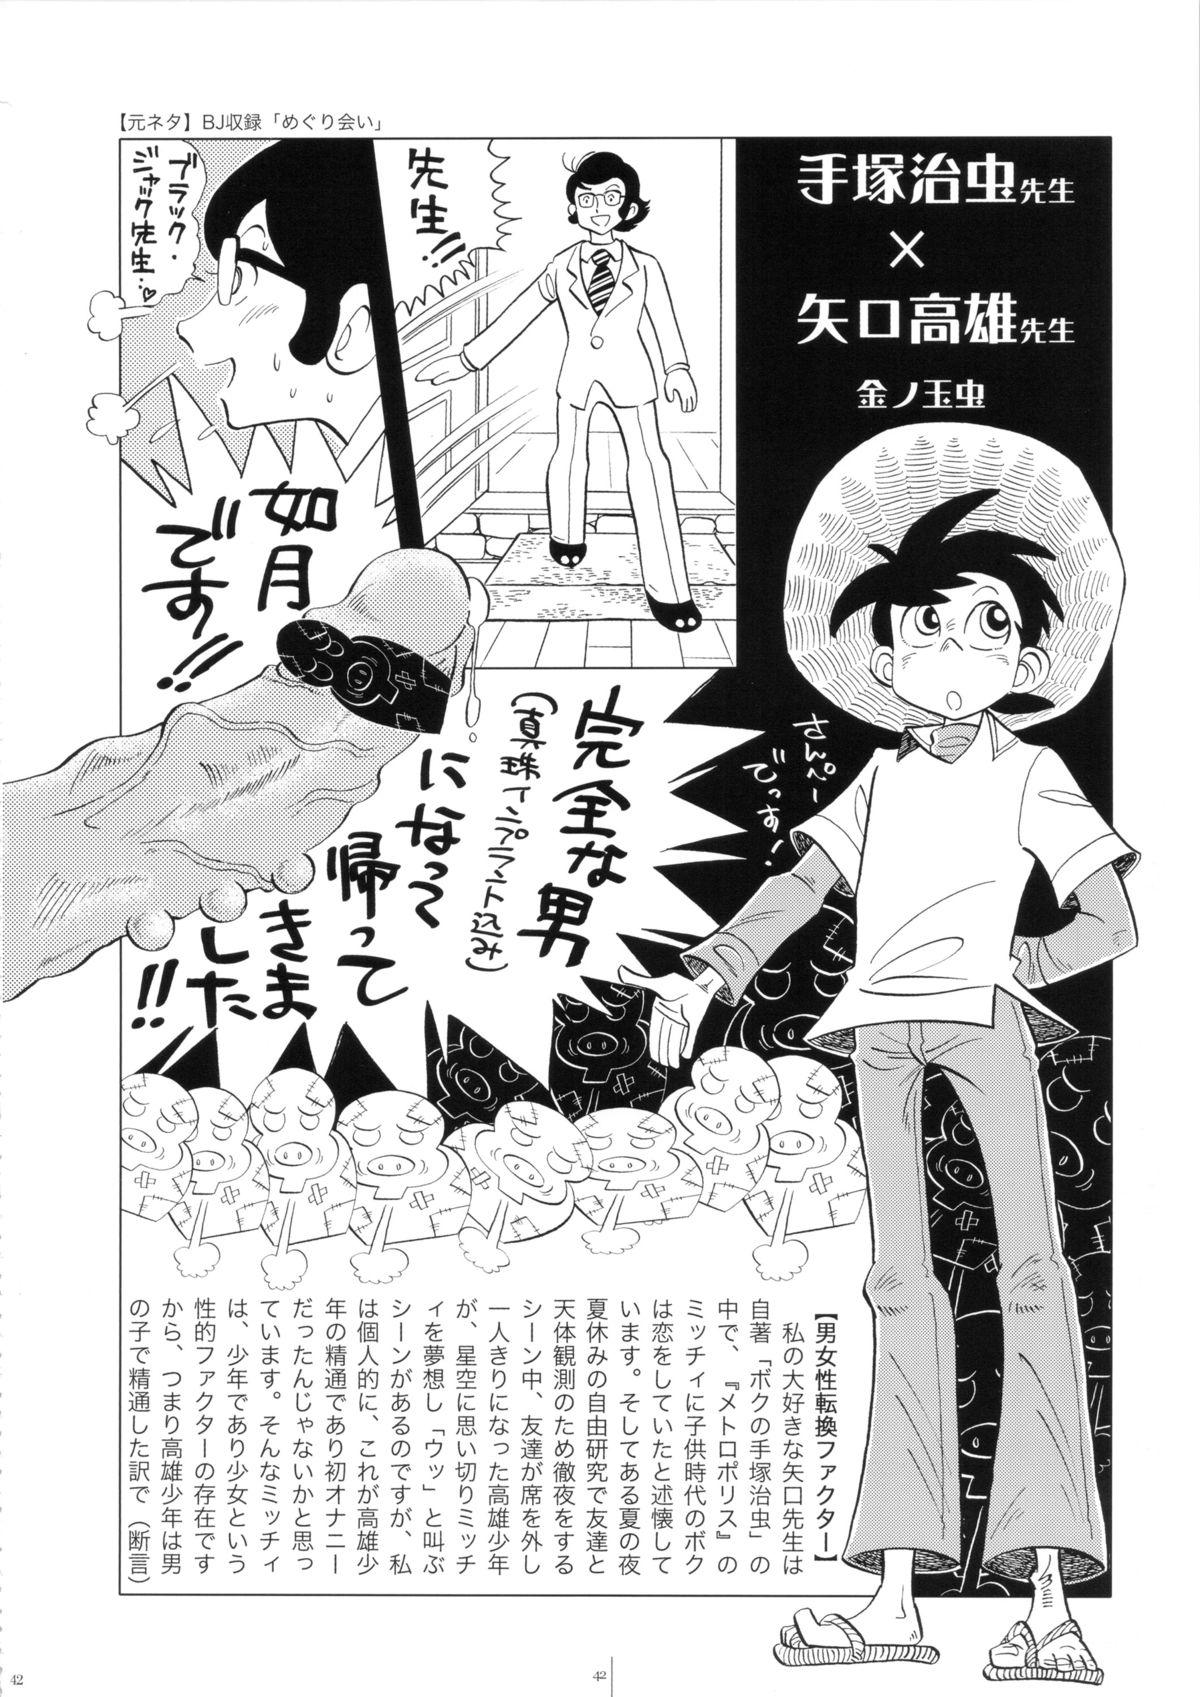 FLOUR2 Tezuka Manga Graffiti 41